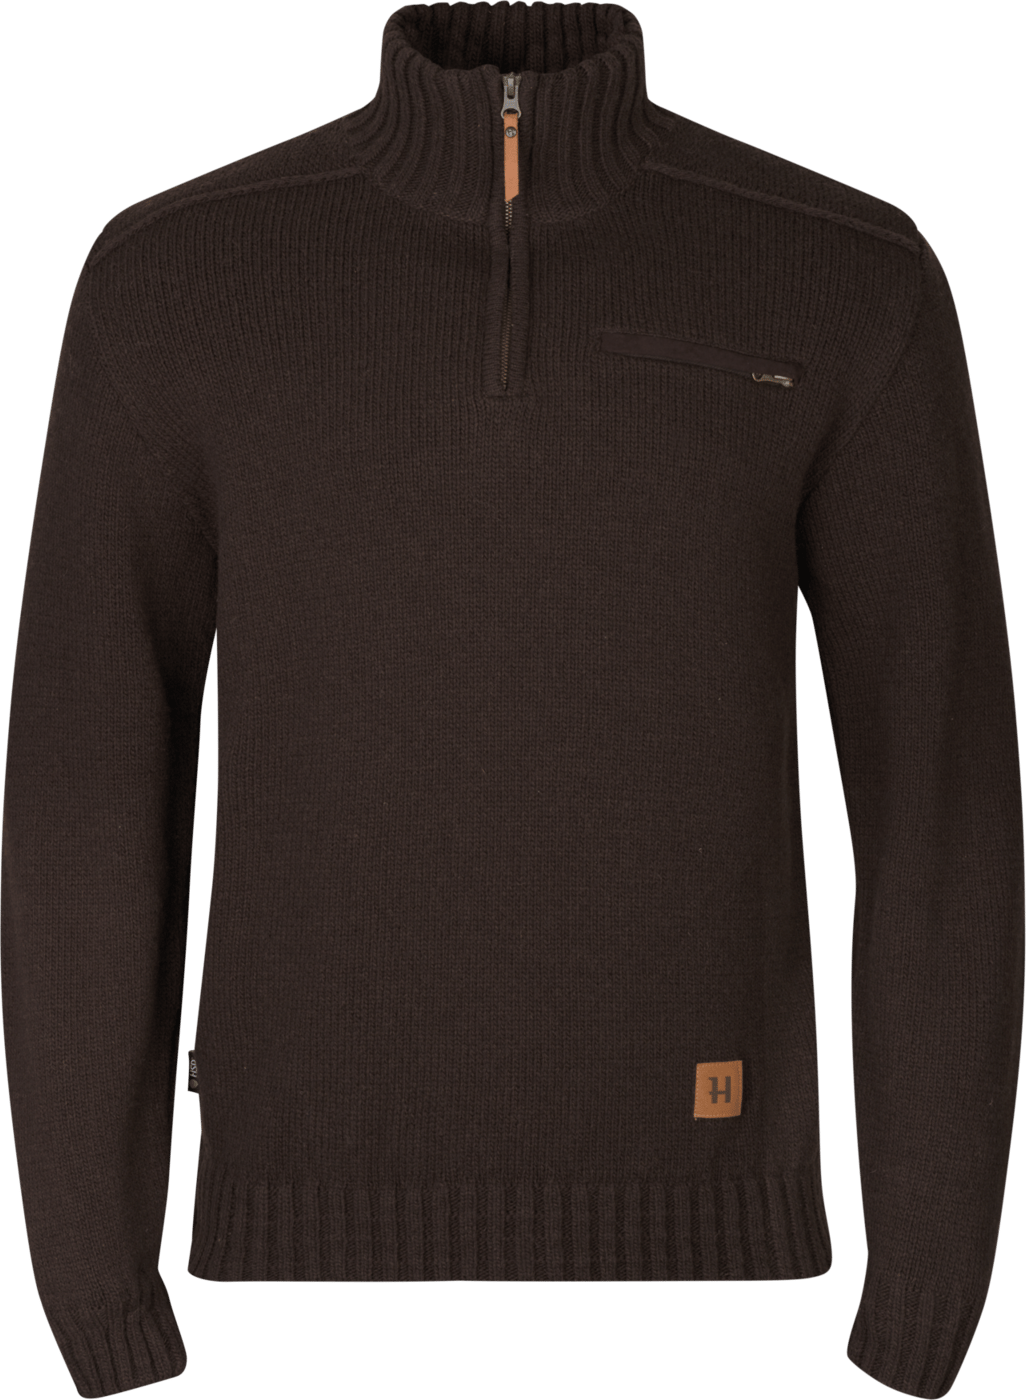 Men's Annaboda 2.0 HSP Knitted Shirt Demitasse brown